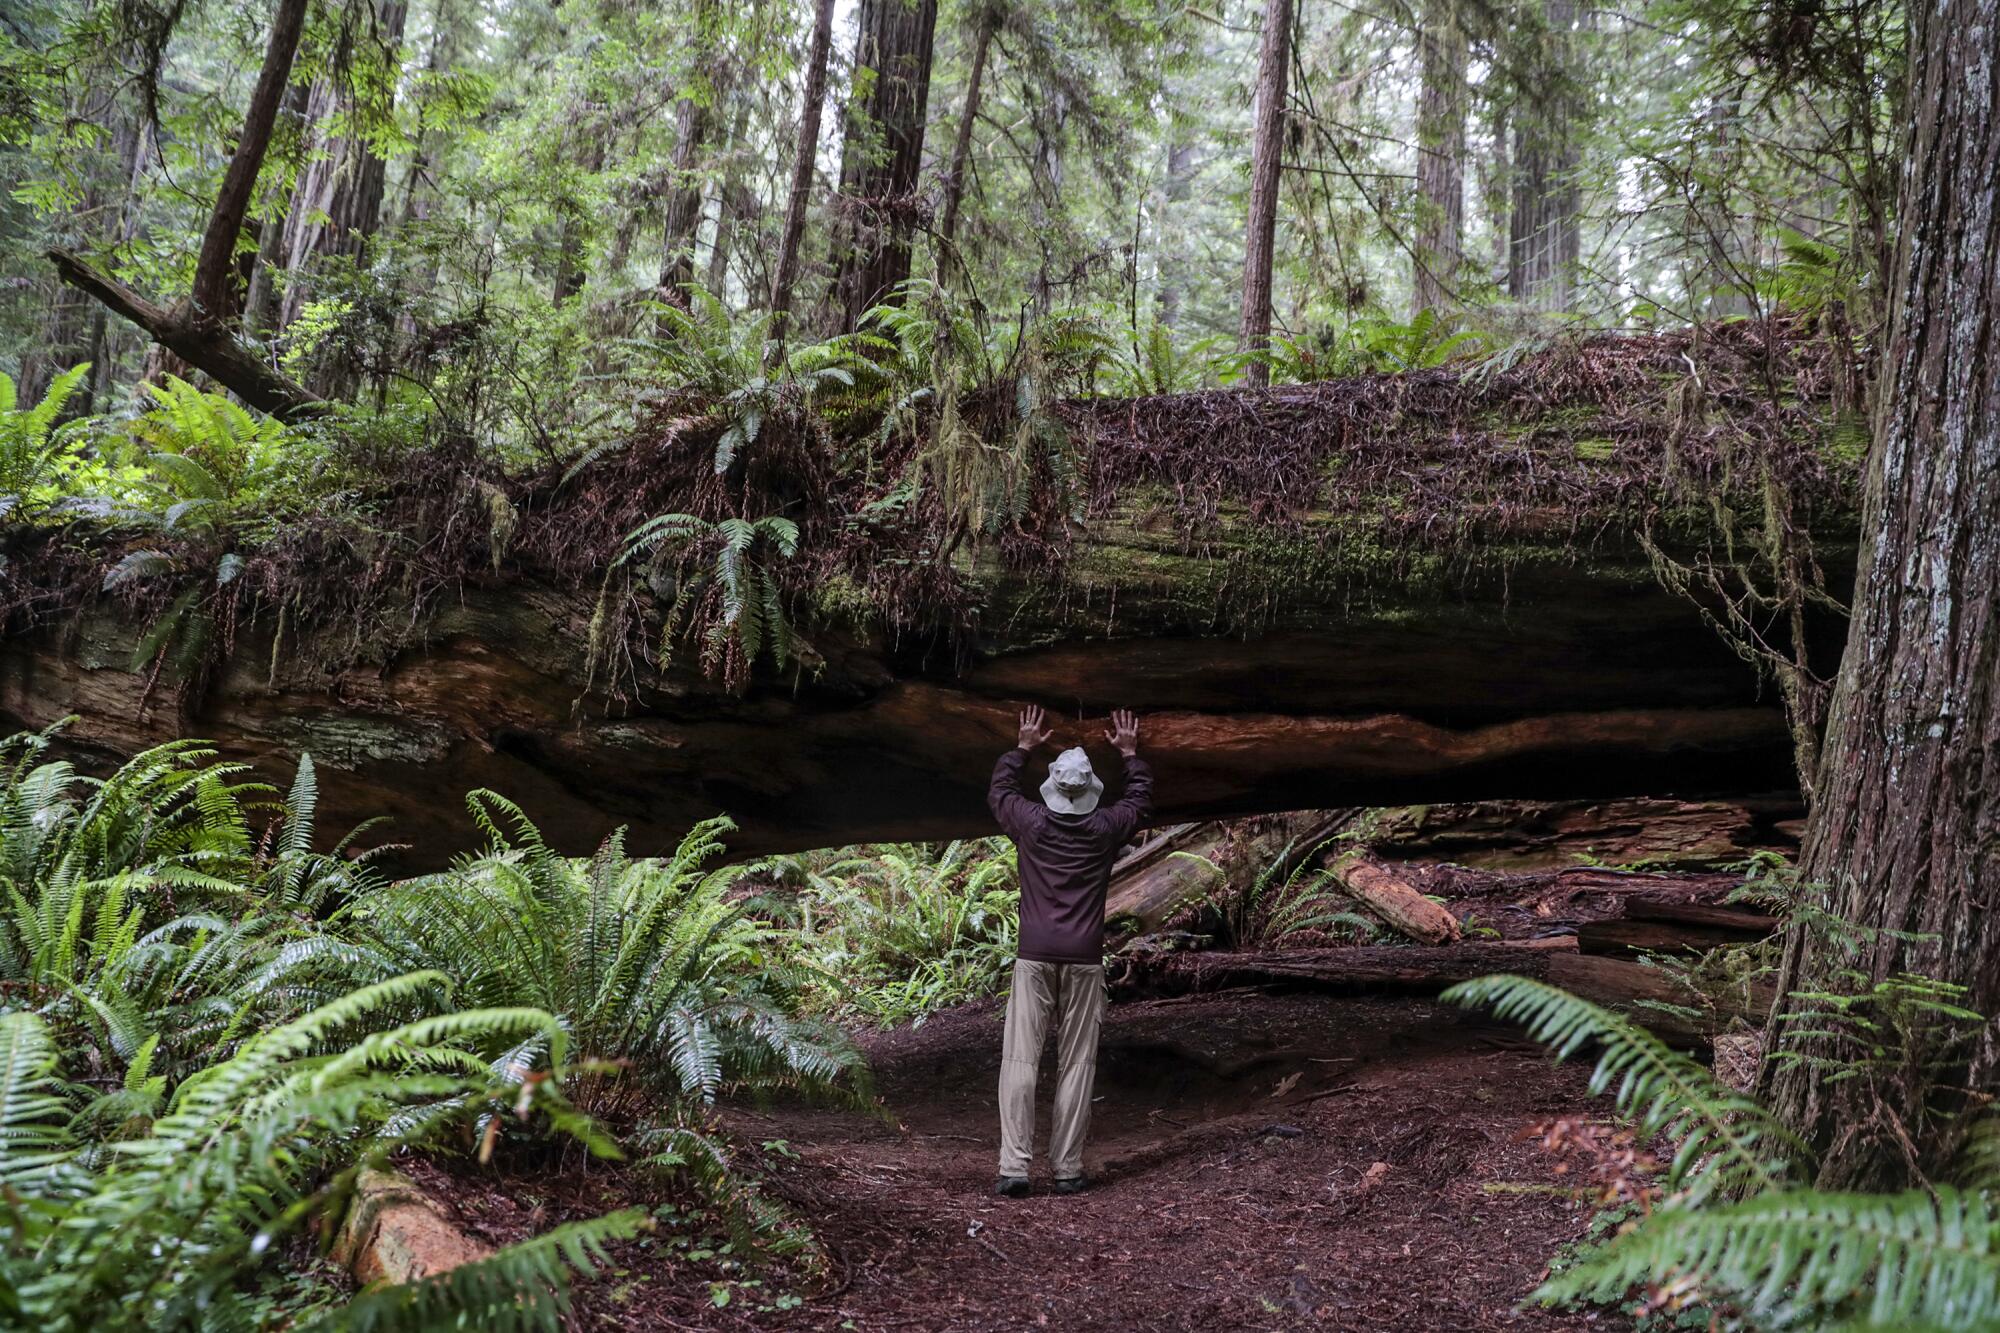 A hiker reaches up to touch a fallen redwood.